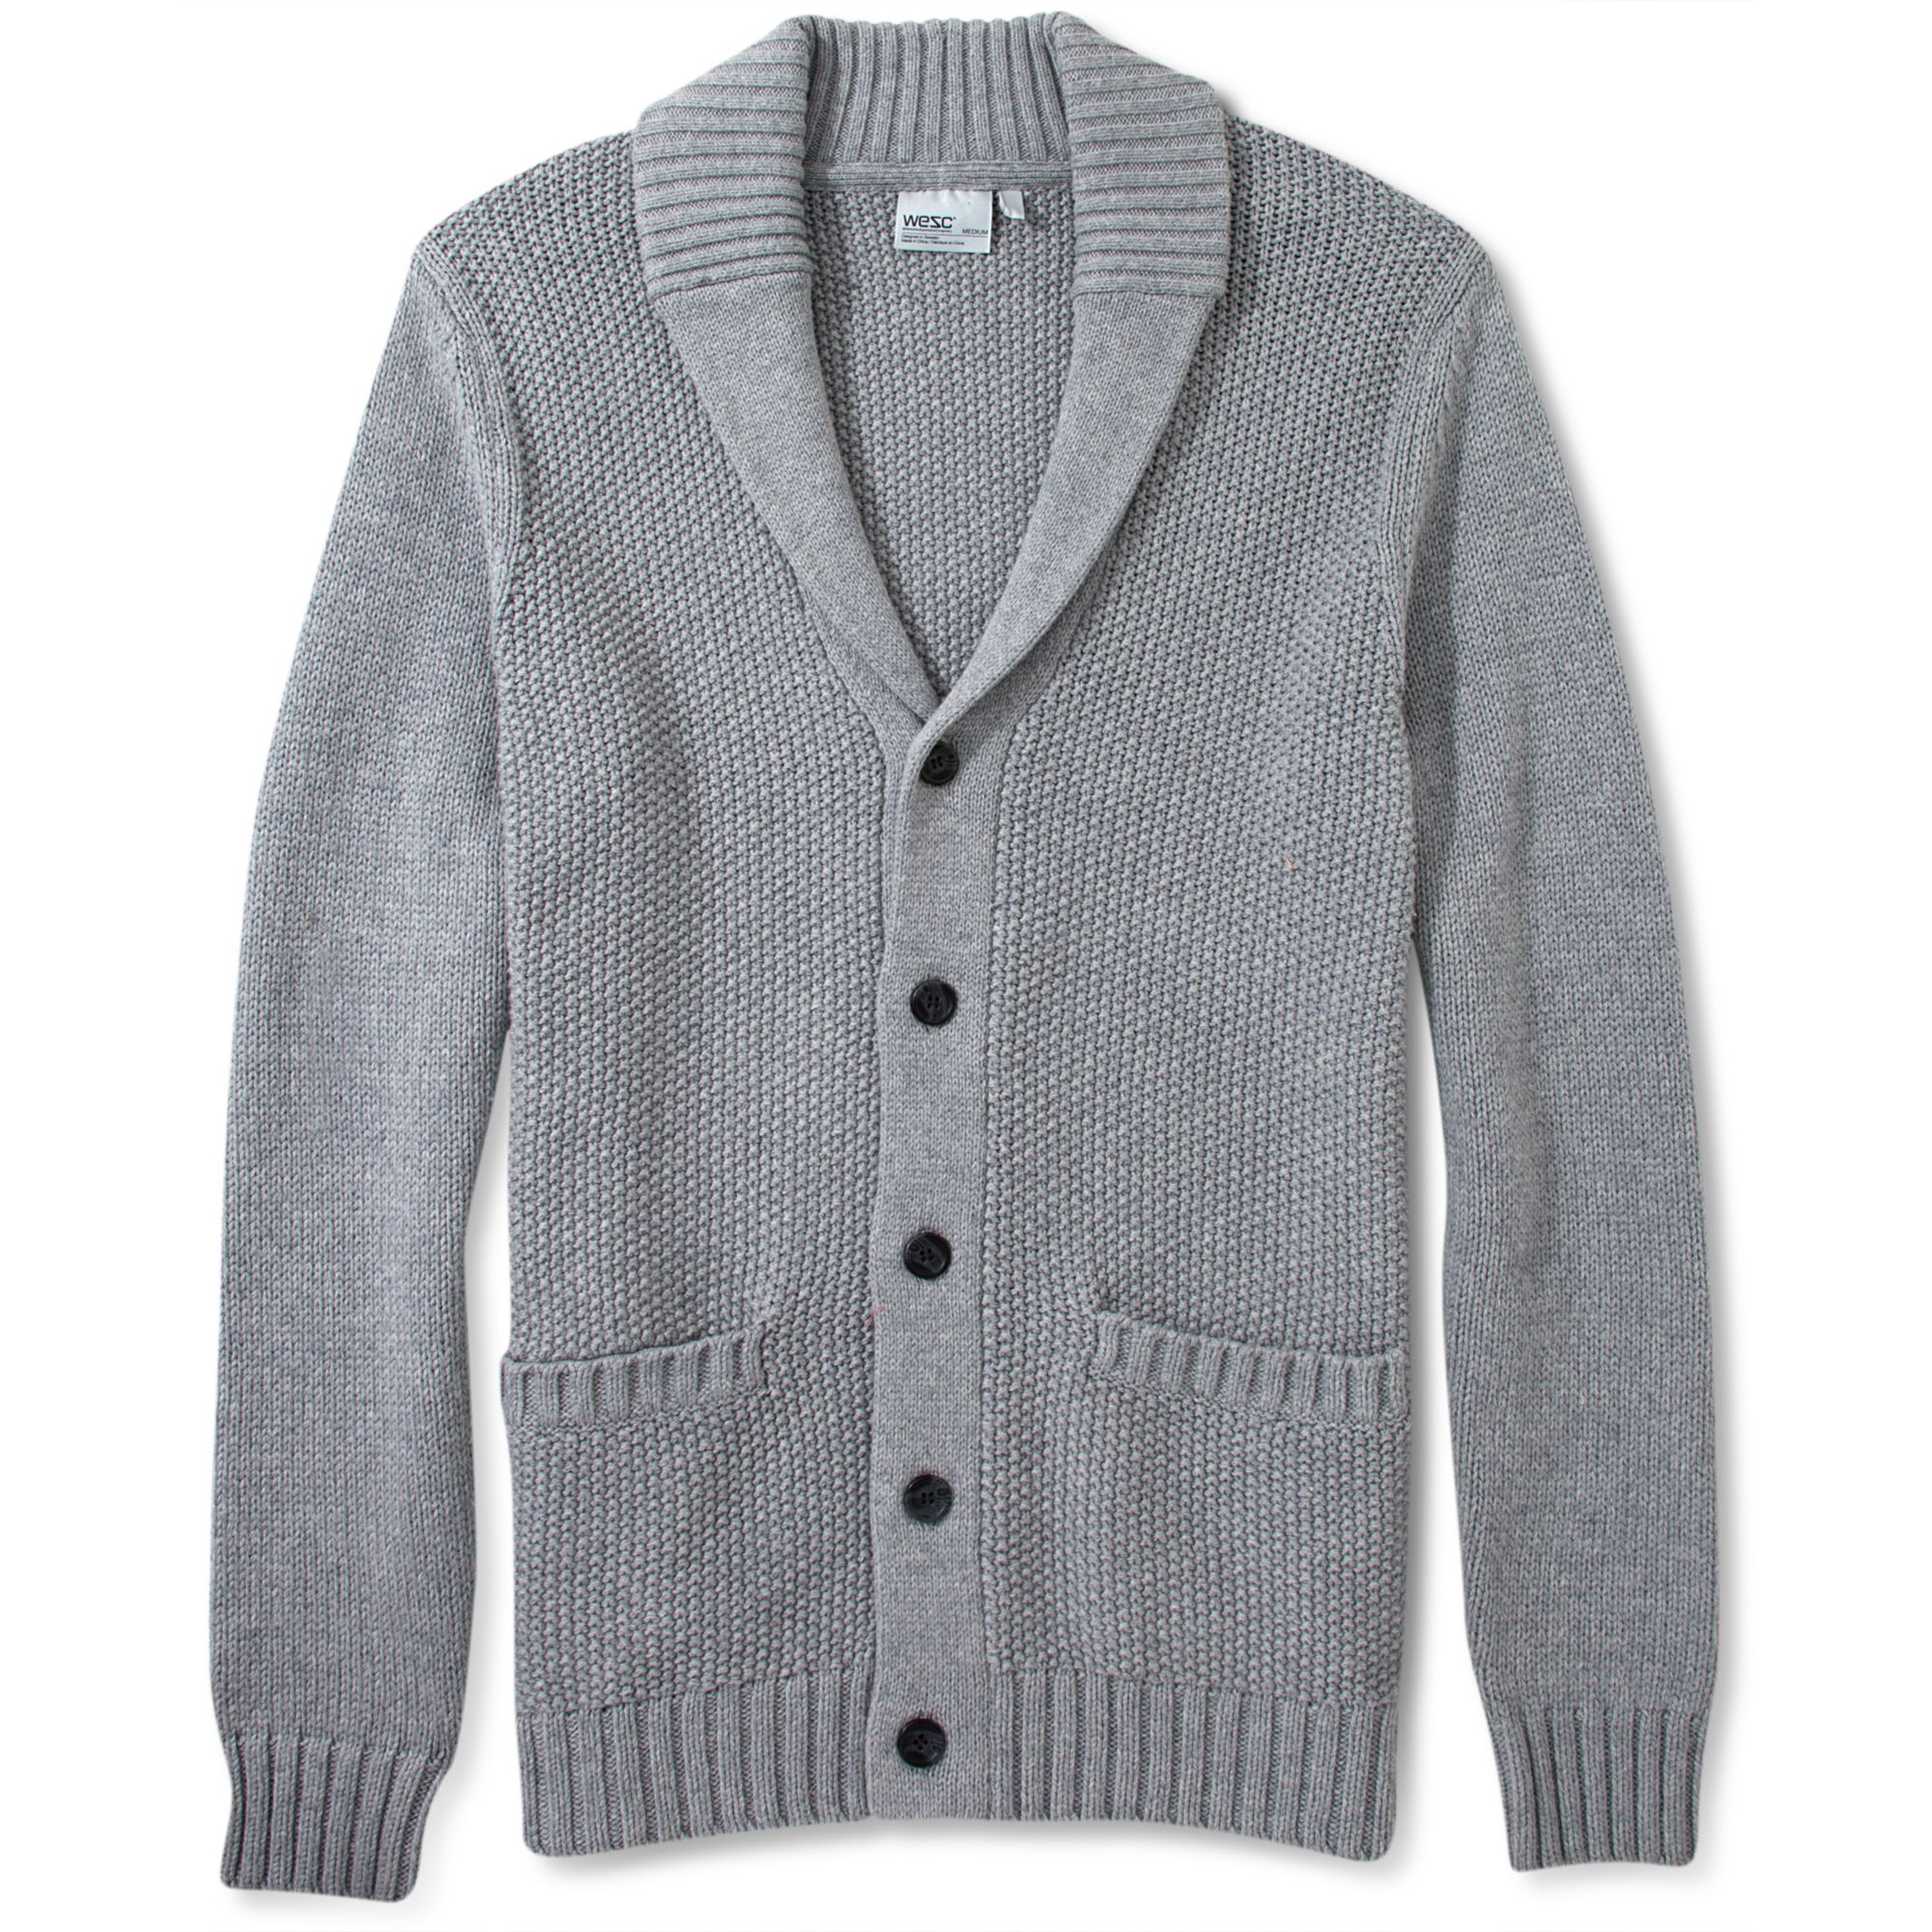 Lyst - Wesc Oscar Cardigan Sweater in Gray for Men